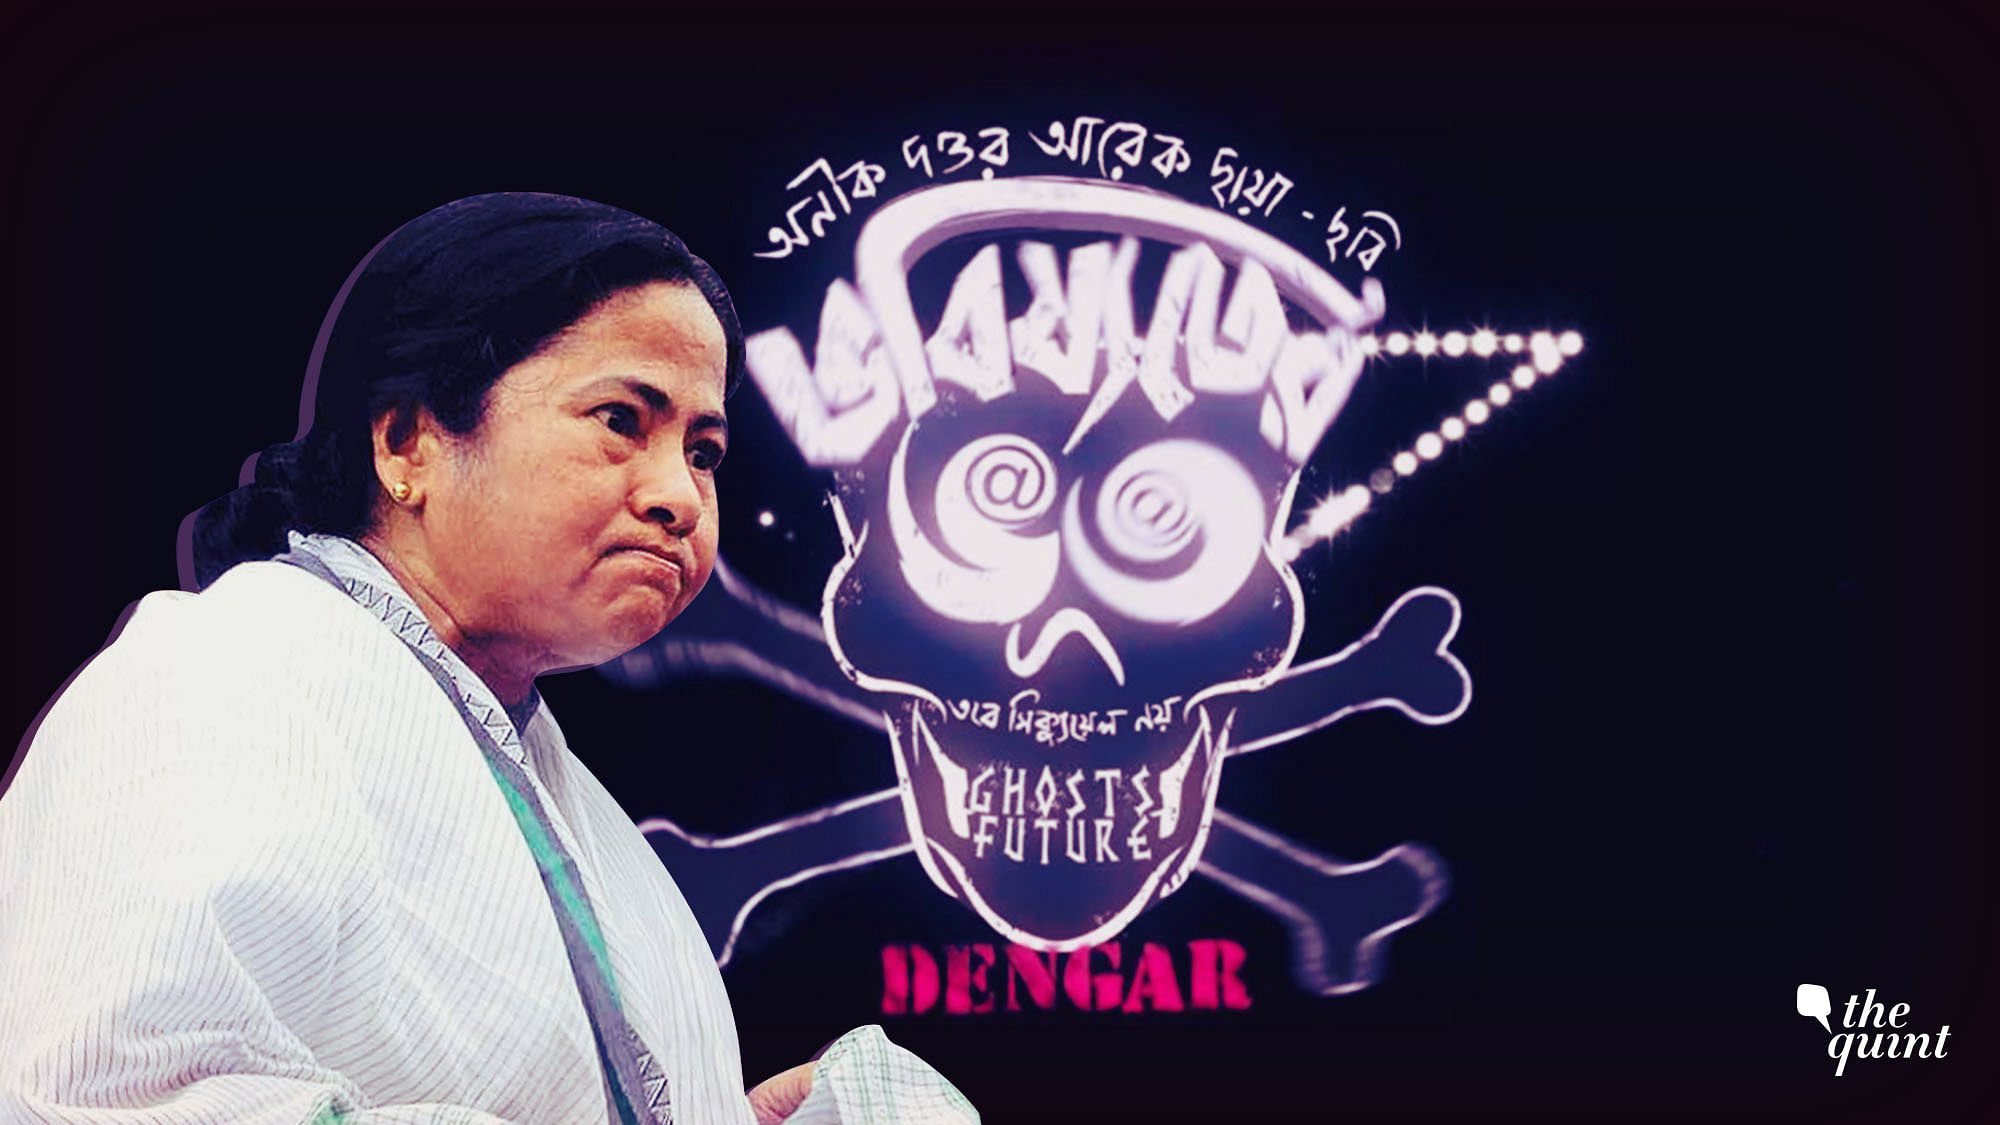 Image of Bengal CM Mamata Banerjee juxtaposed against the movie poster, used for representational purposes.